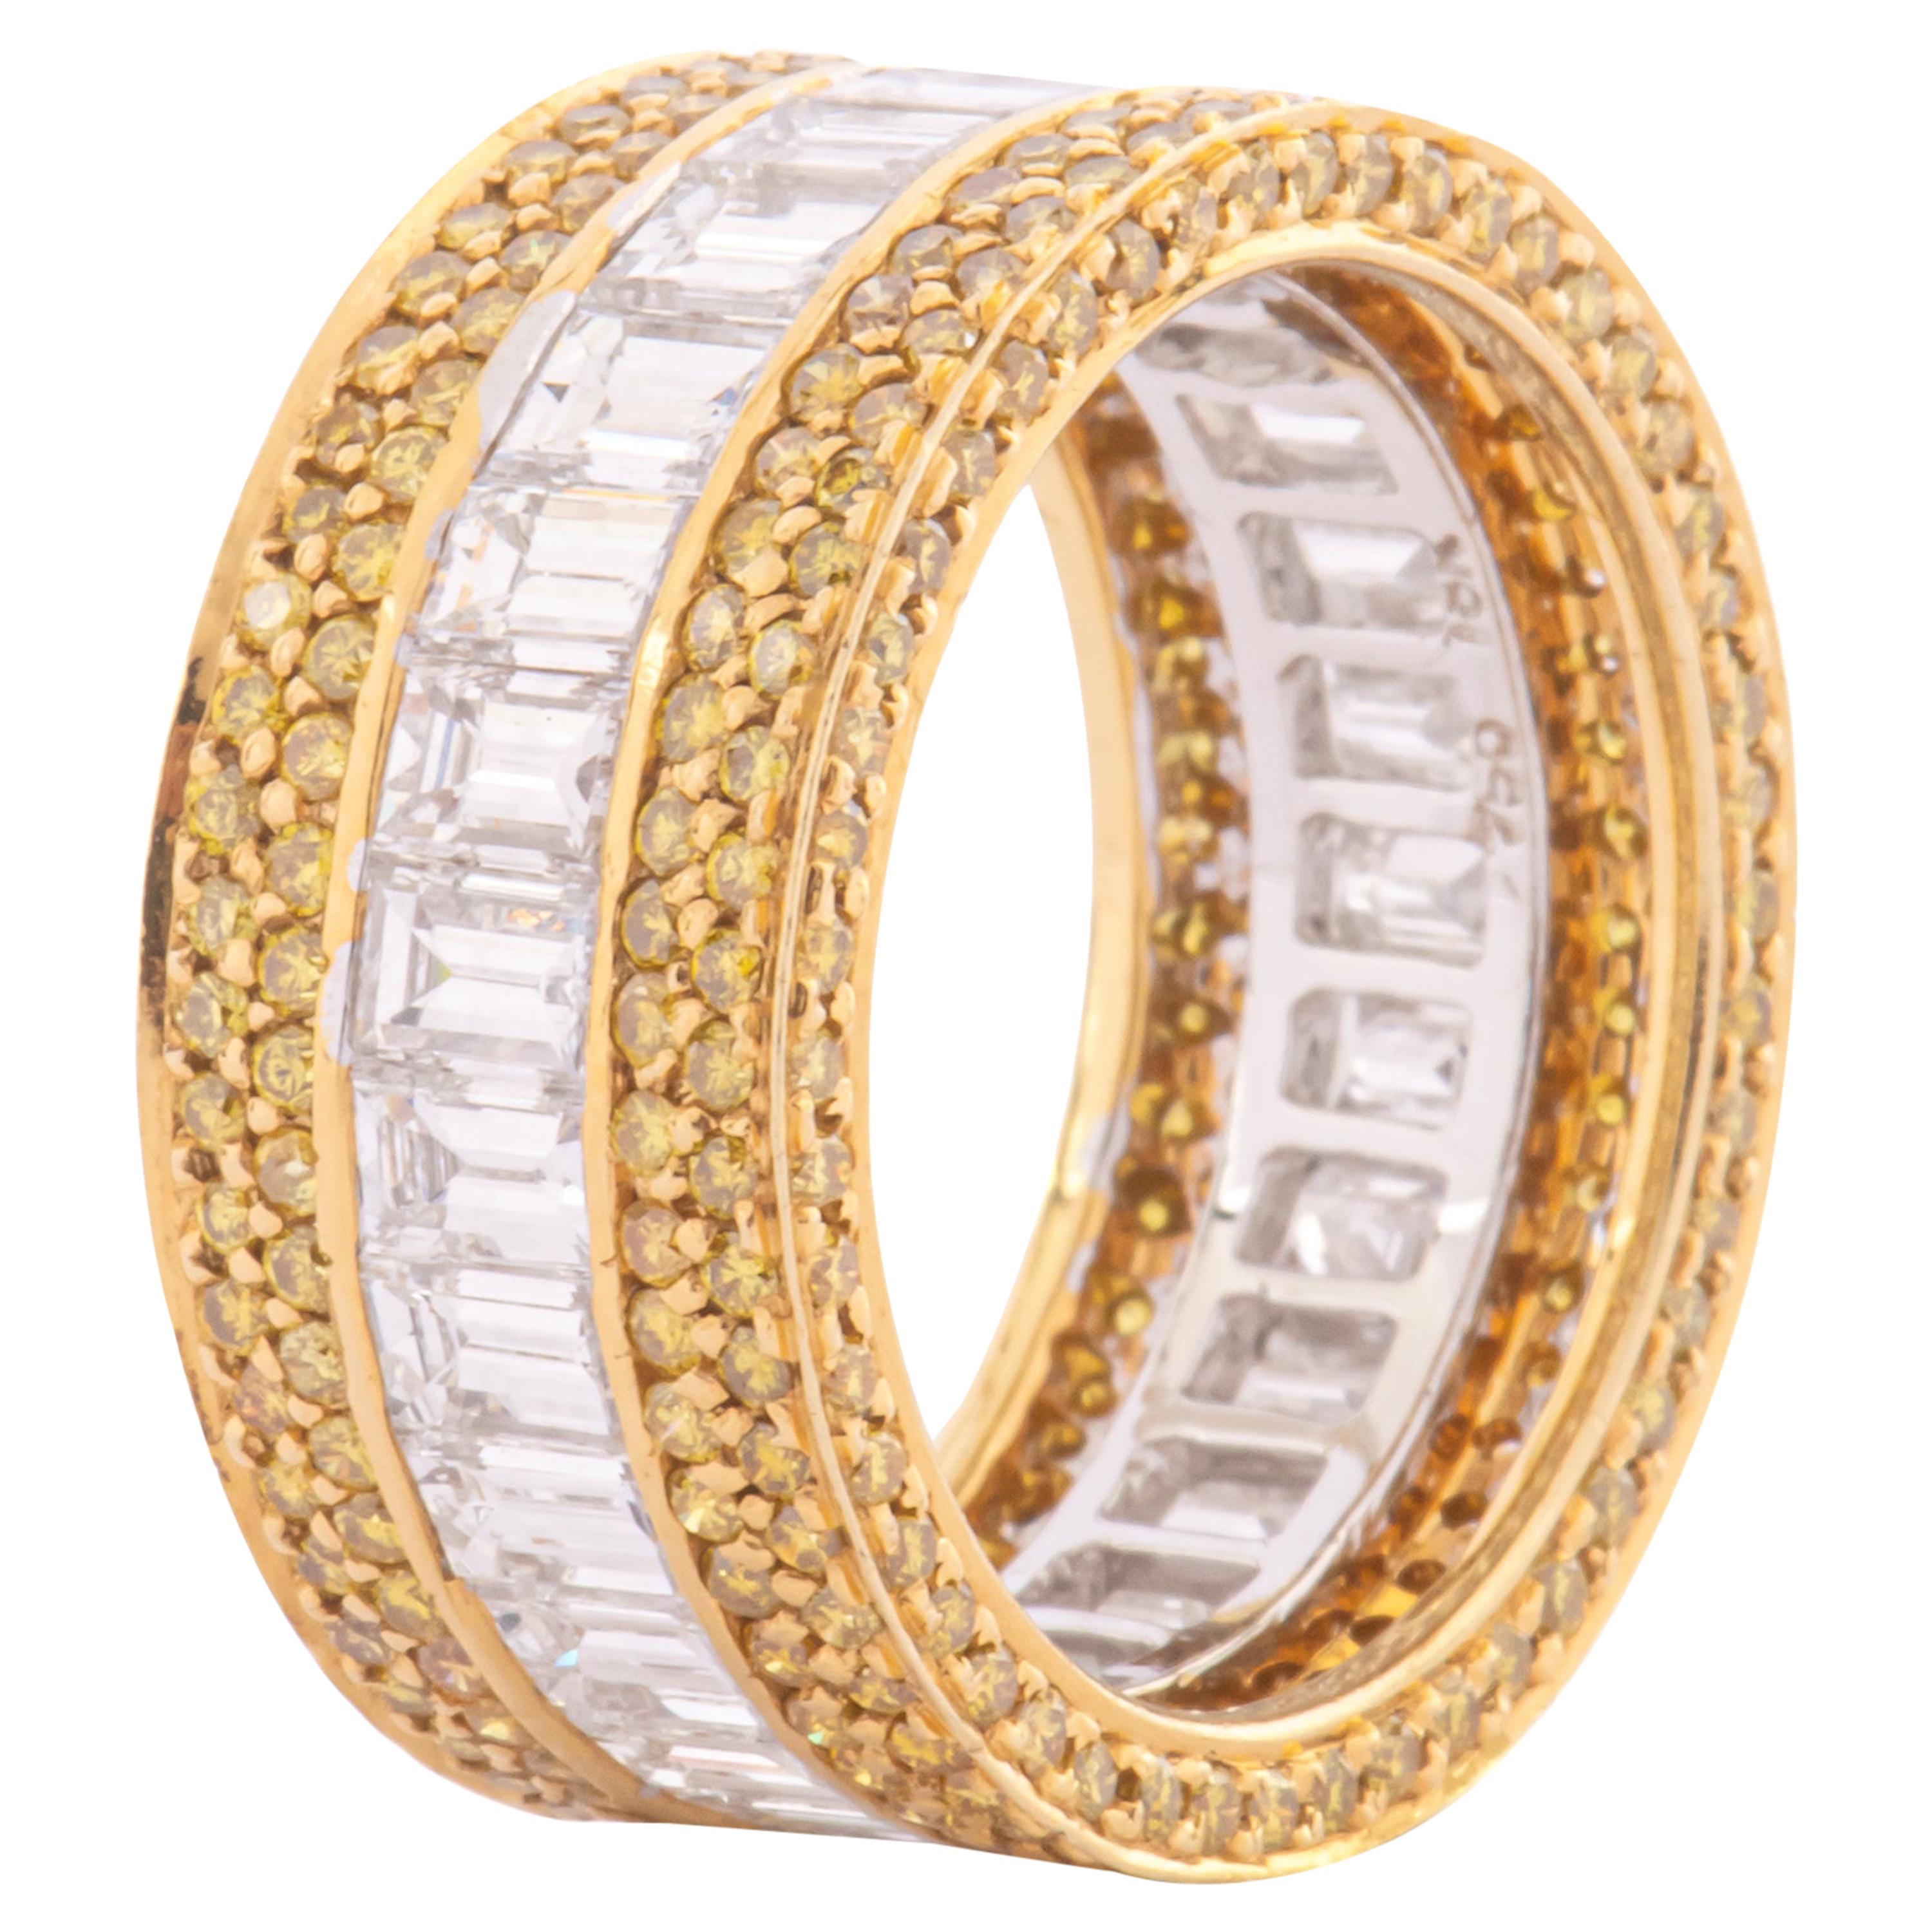 Sabbadini Exquisite Diamond Band Ring